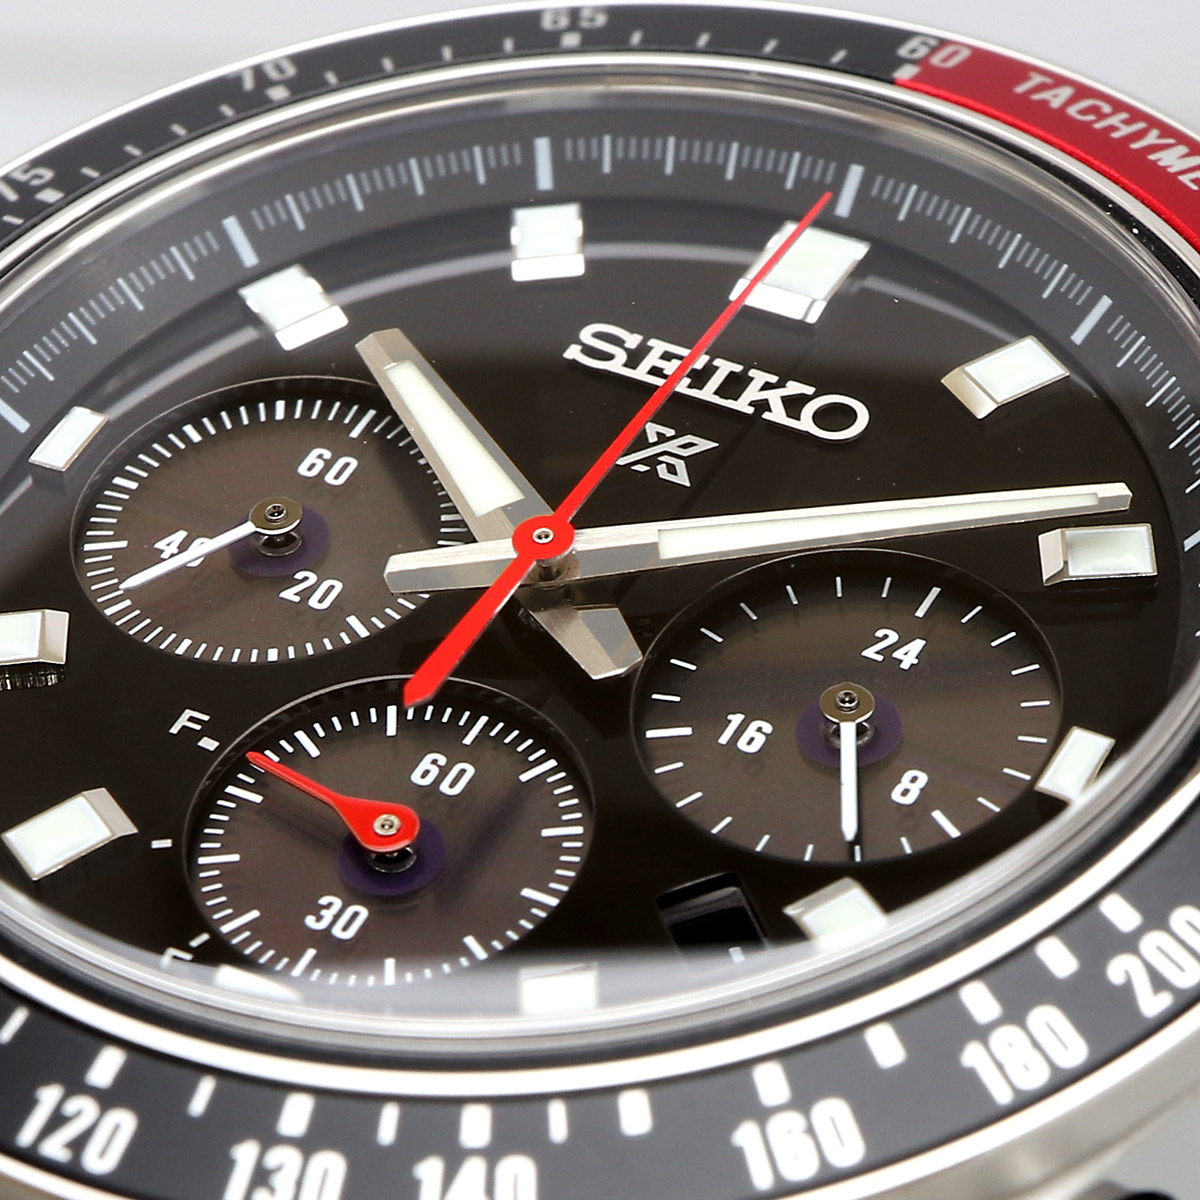 SEIKO セイコー 腕時計 メンズ 海外モデル PROSPEX プロスペックス 